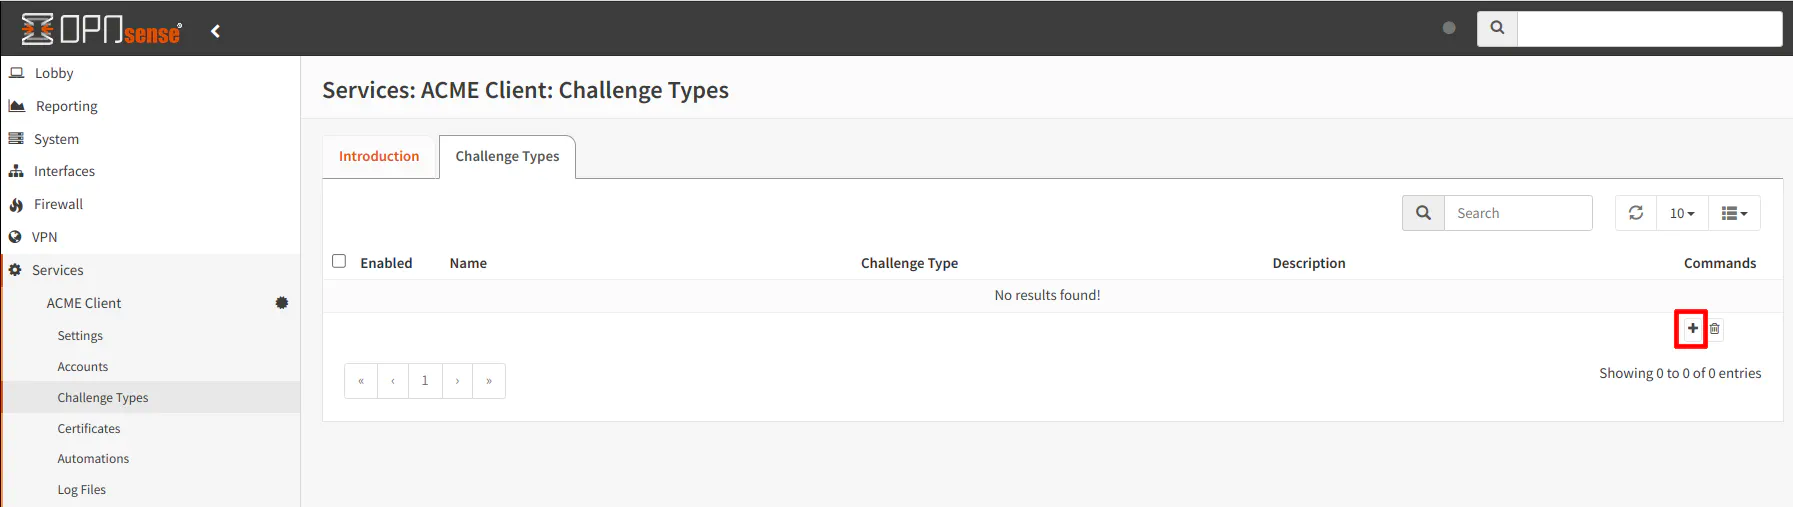 ACME Client Challenge Types